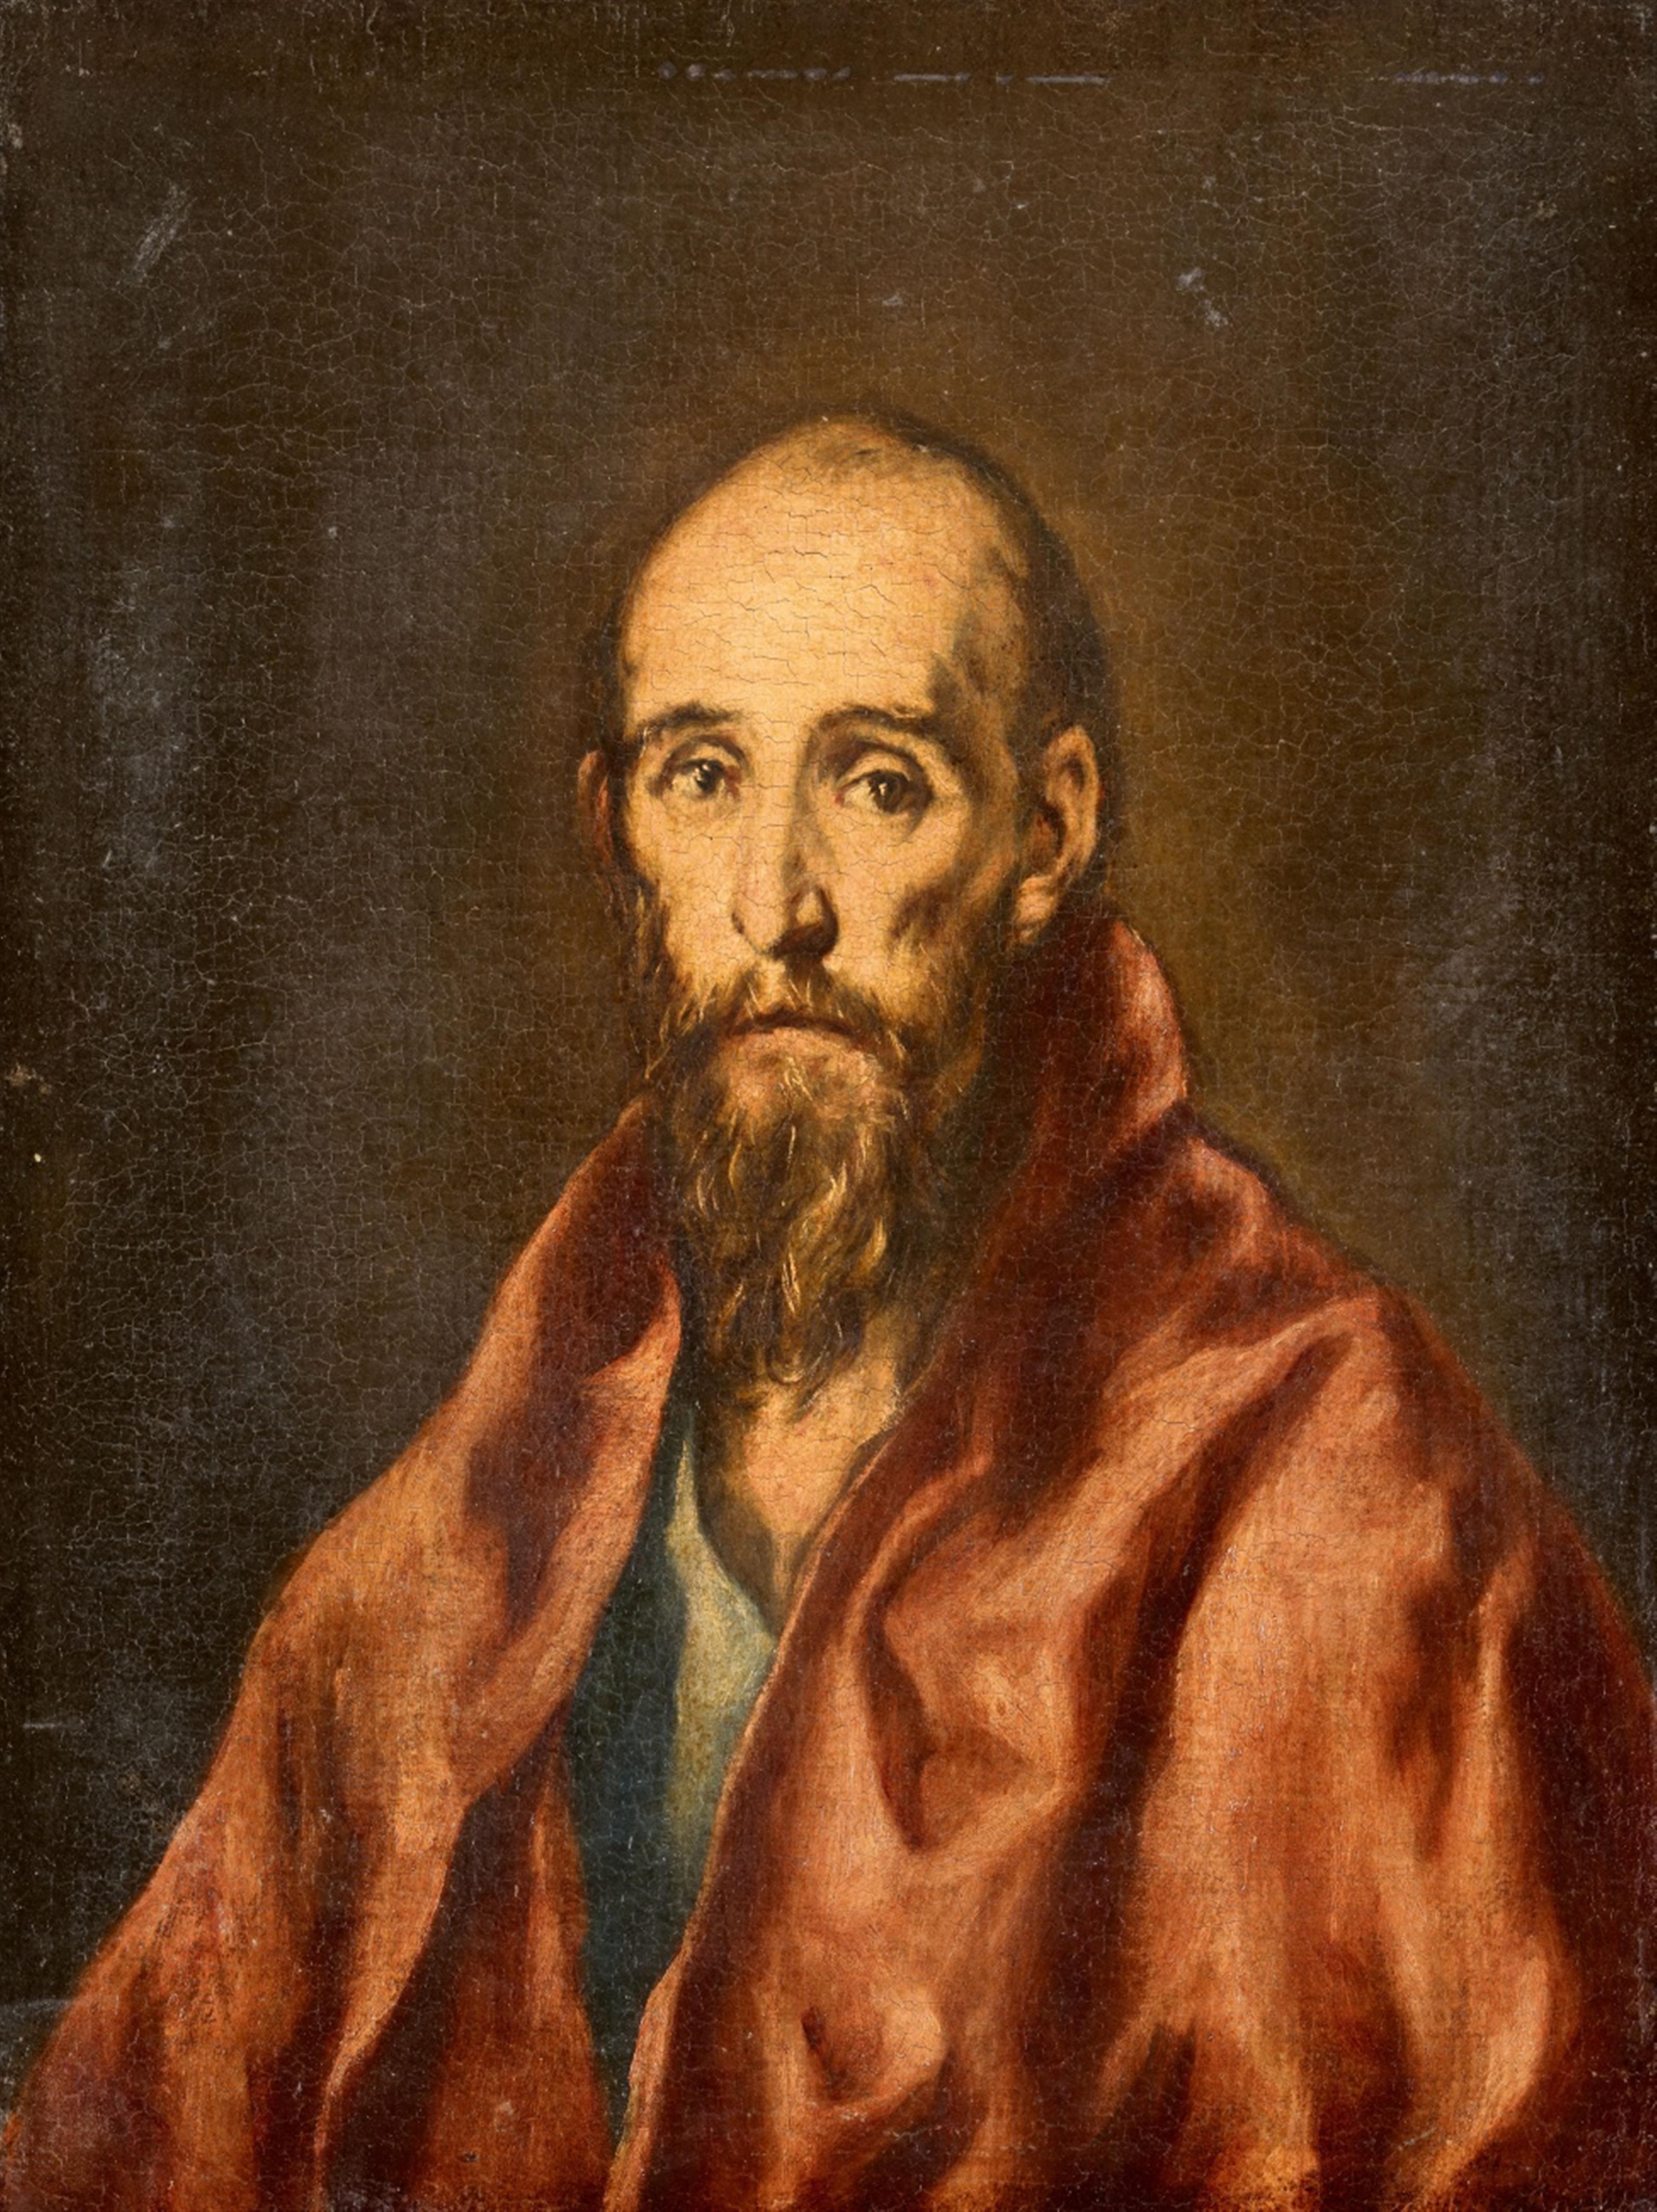 Domínikos Theotokópoulos, called El Greco, circle or follower of - Saint Paul - image-1